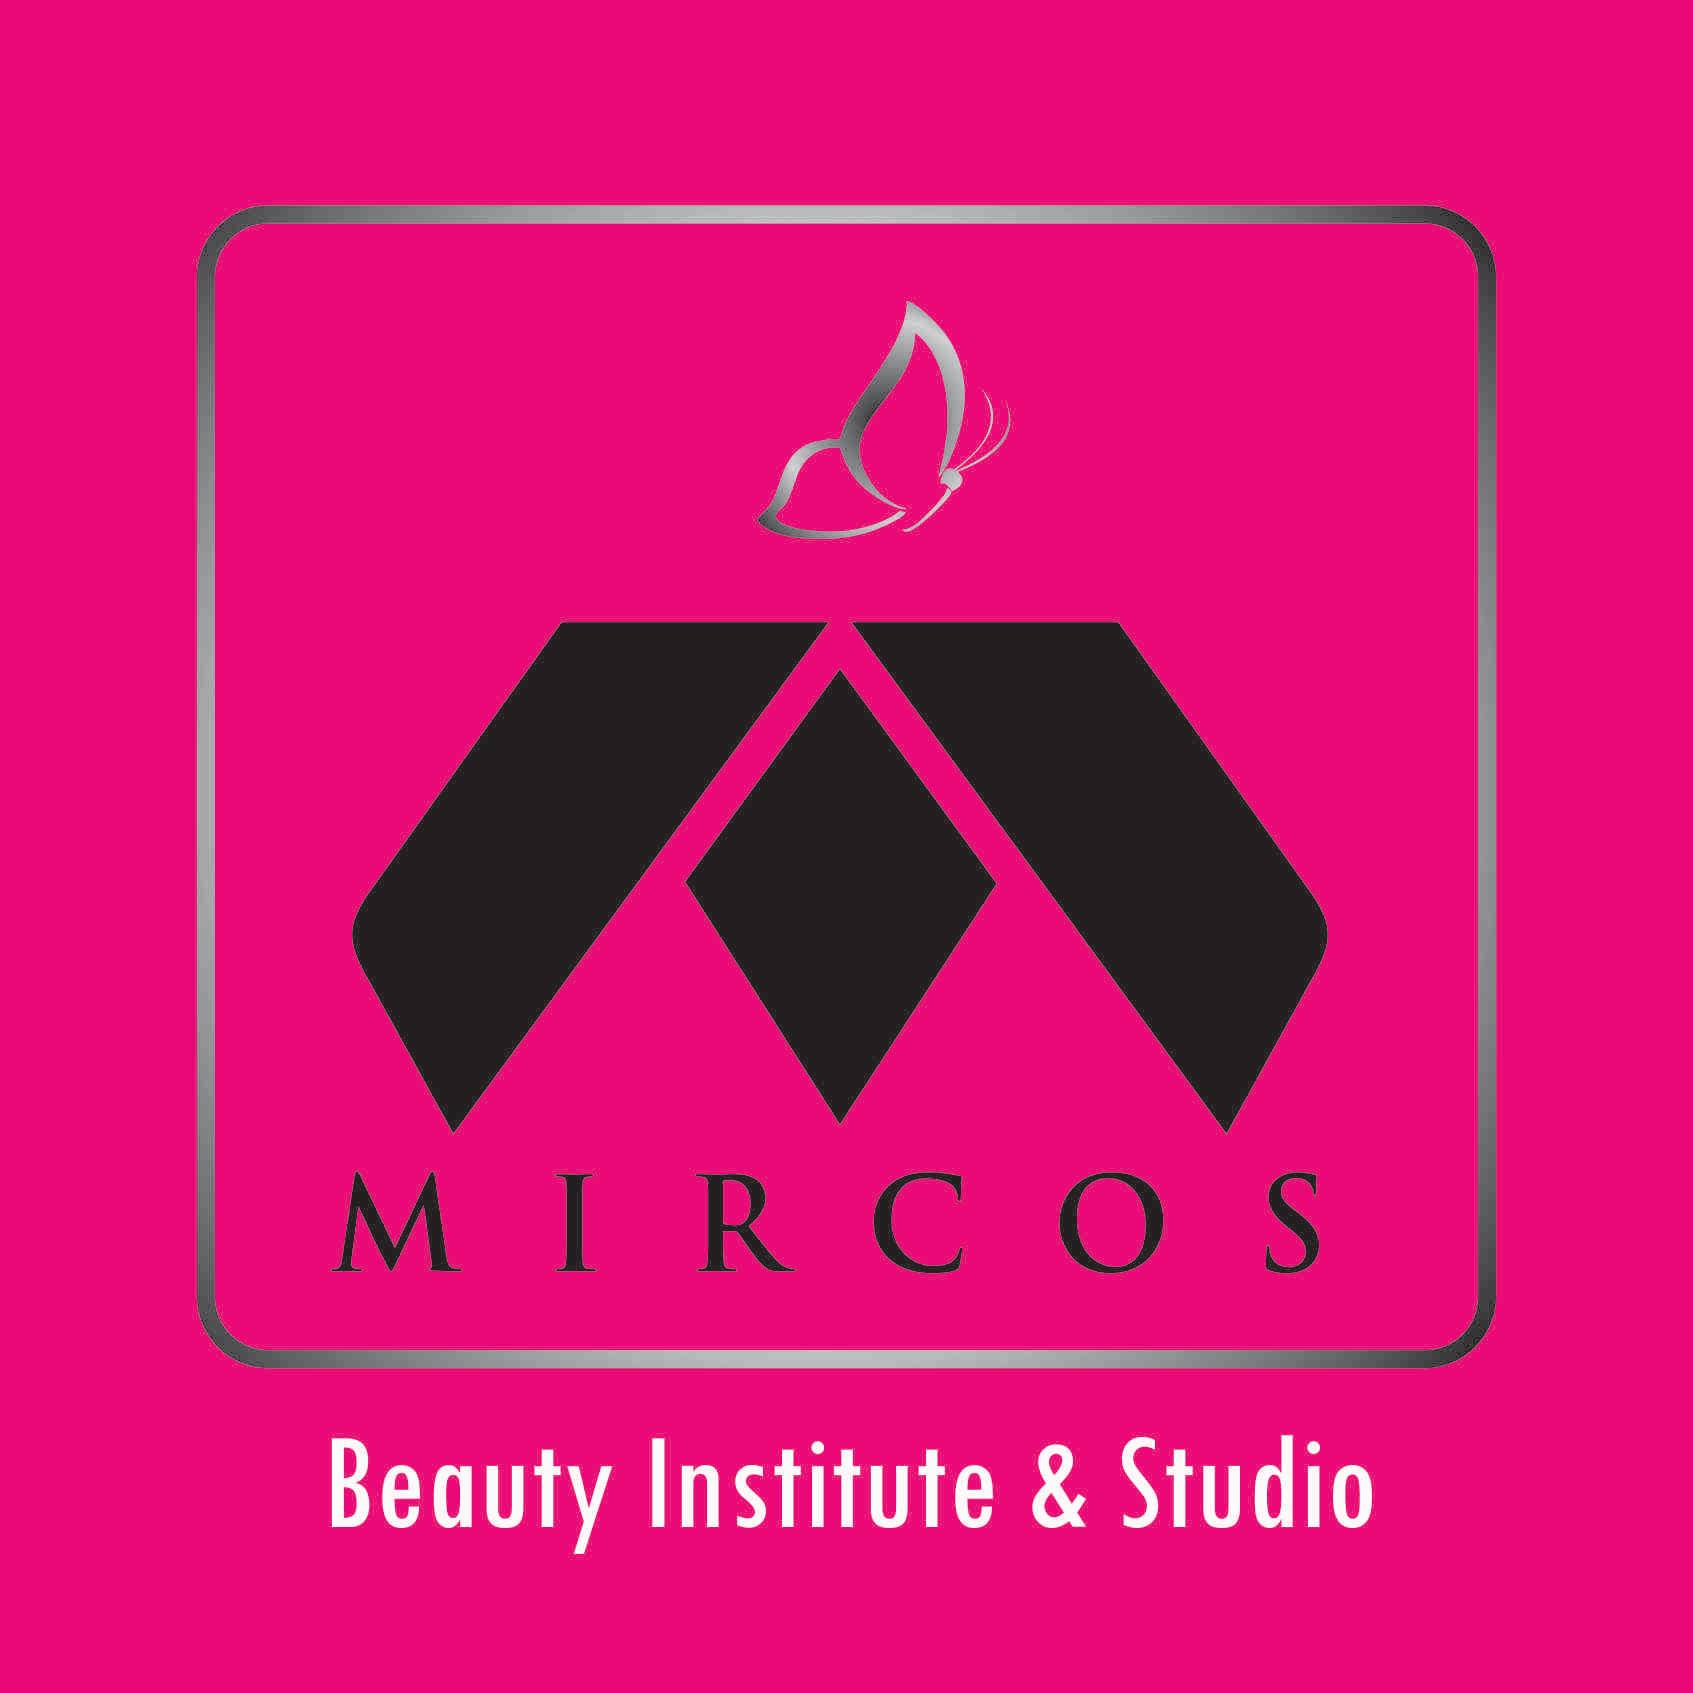 Mircos Beauty Studio & Institute - Logo